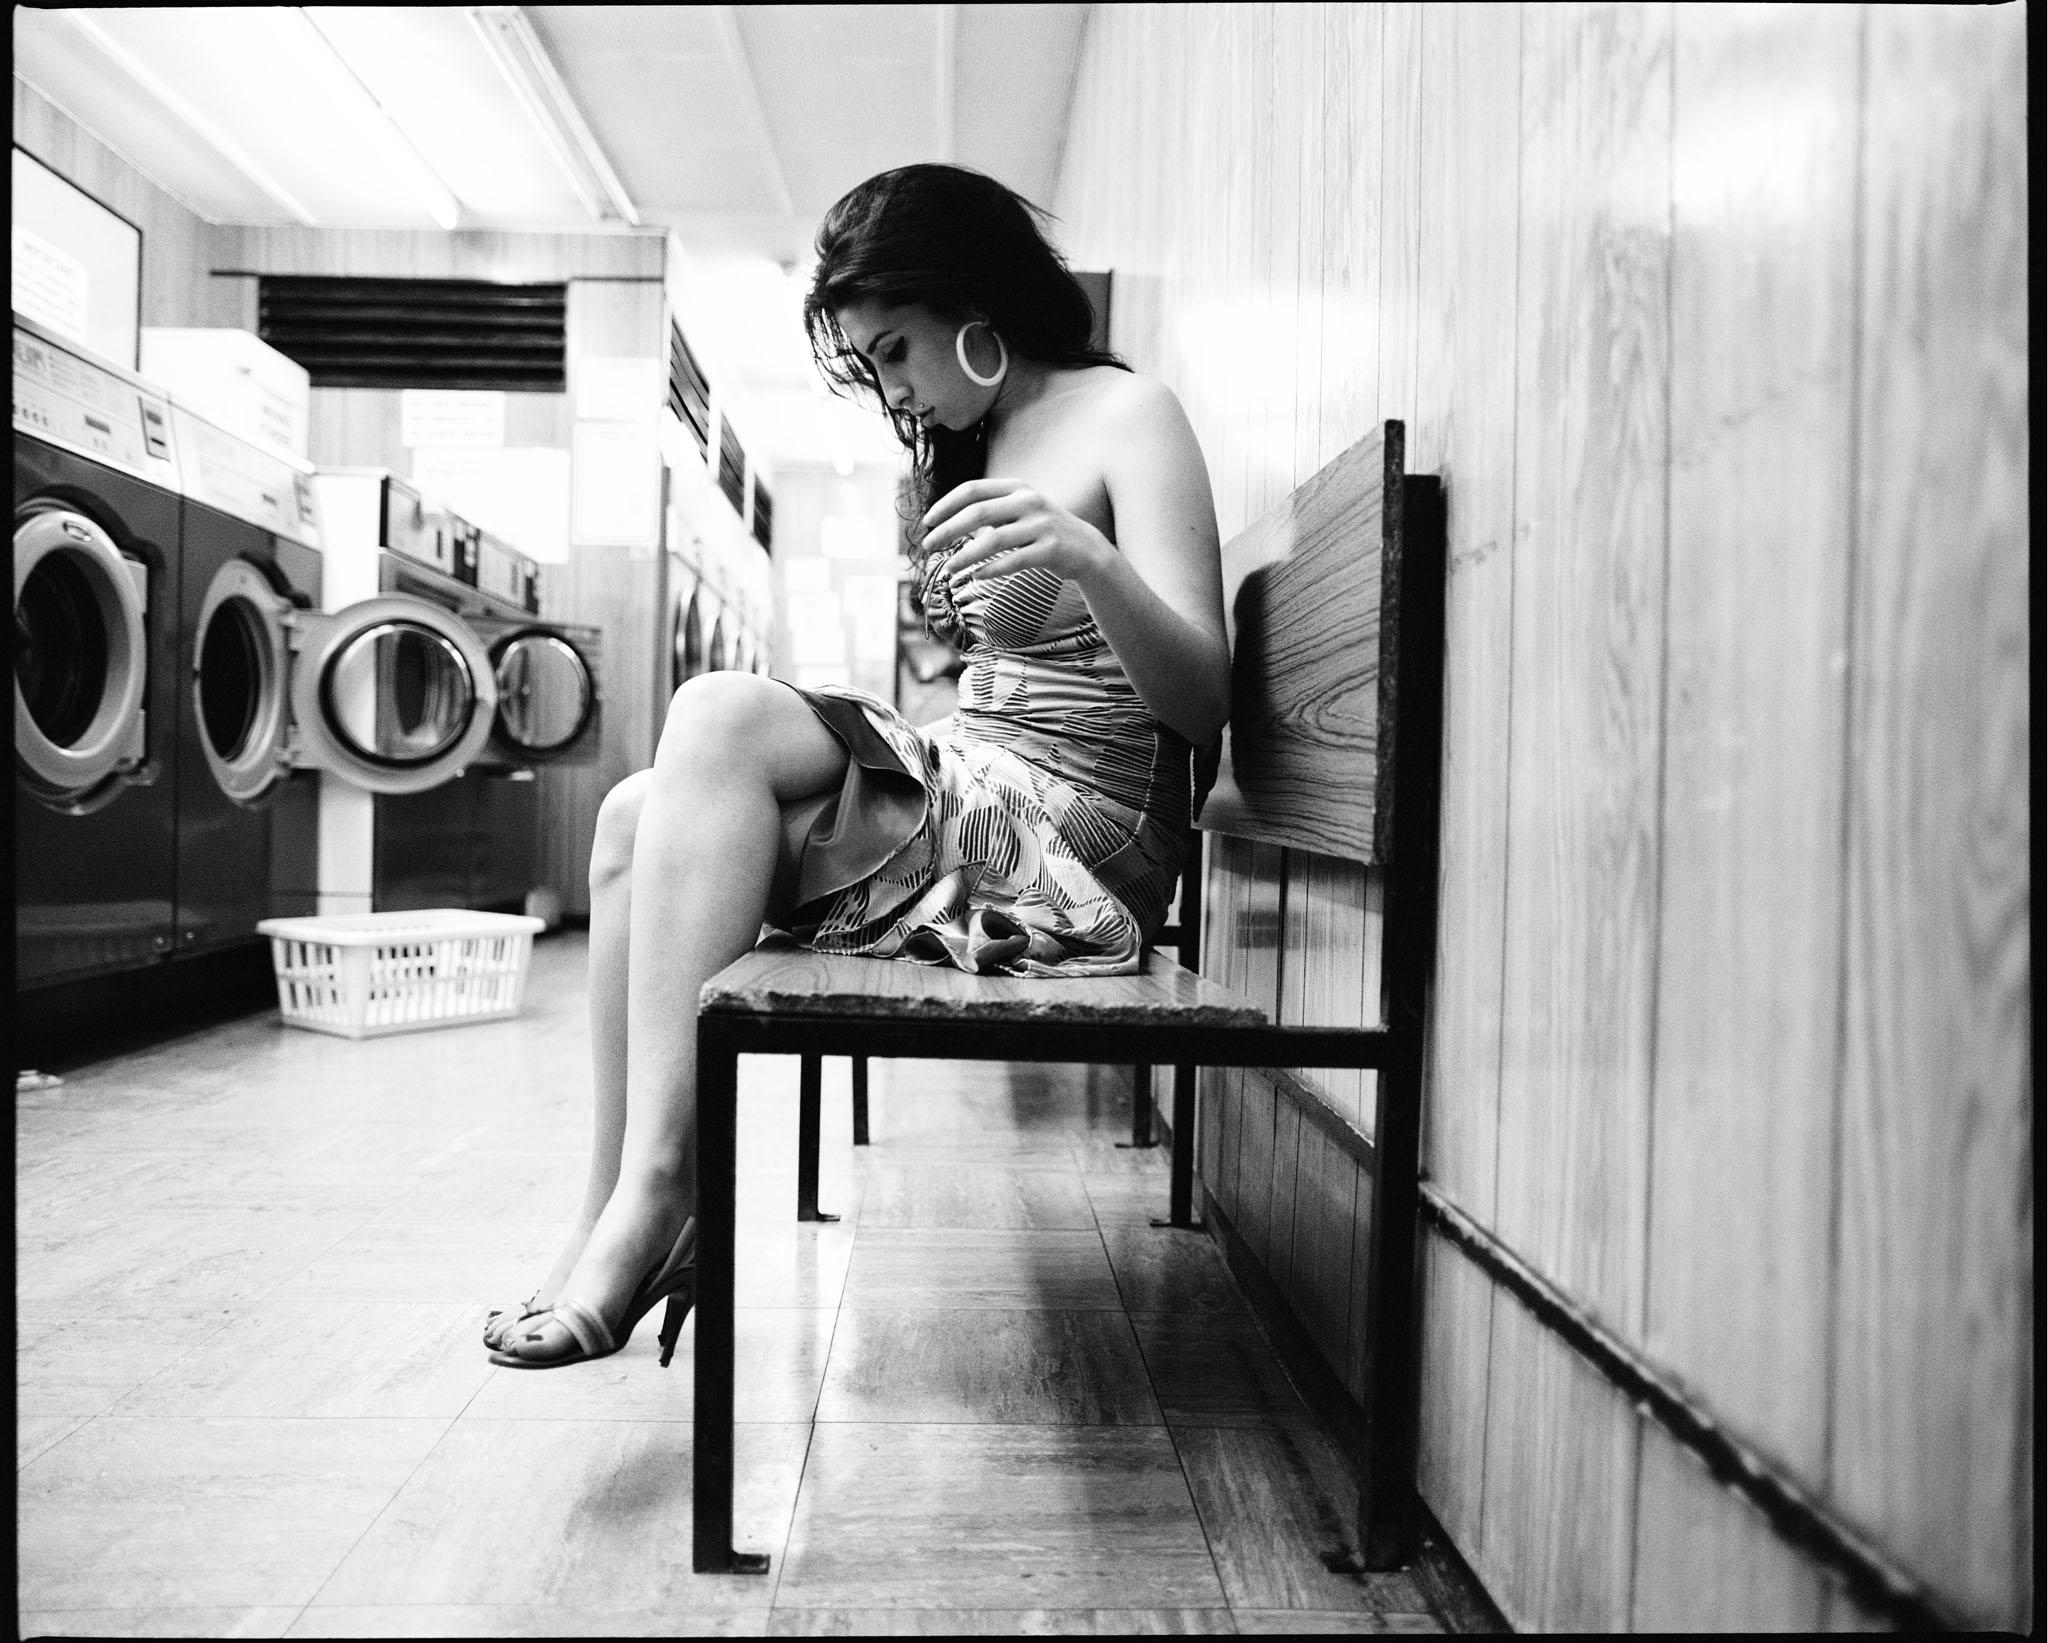 Jake Chessum Portrait Photograph - Amy Winehouse at the laundromat 20x24" print